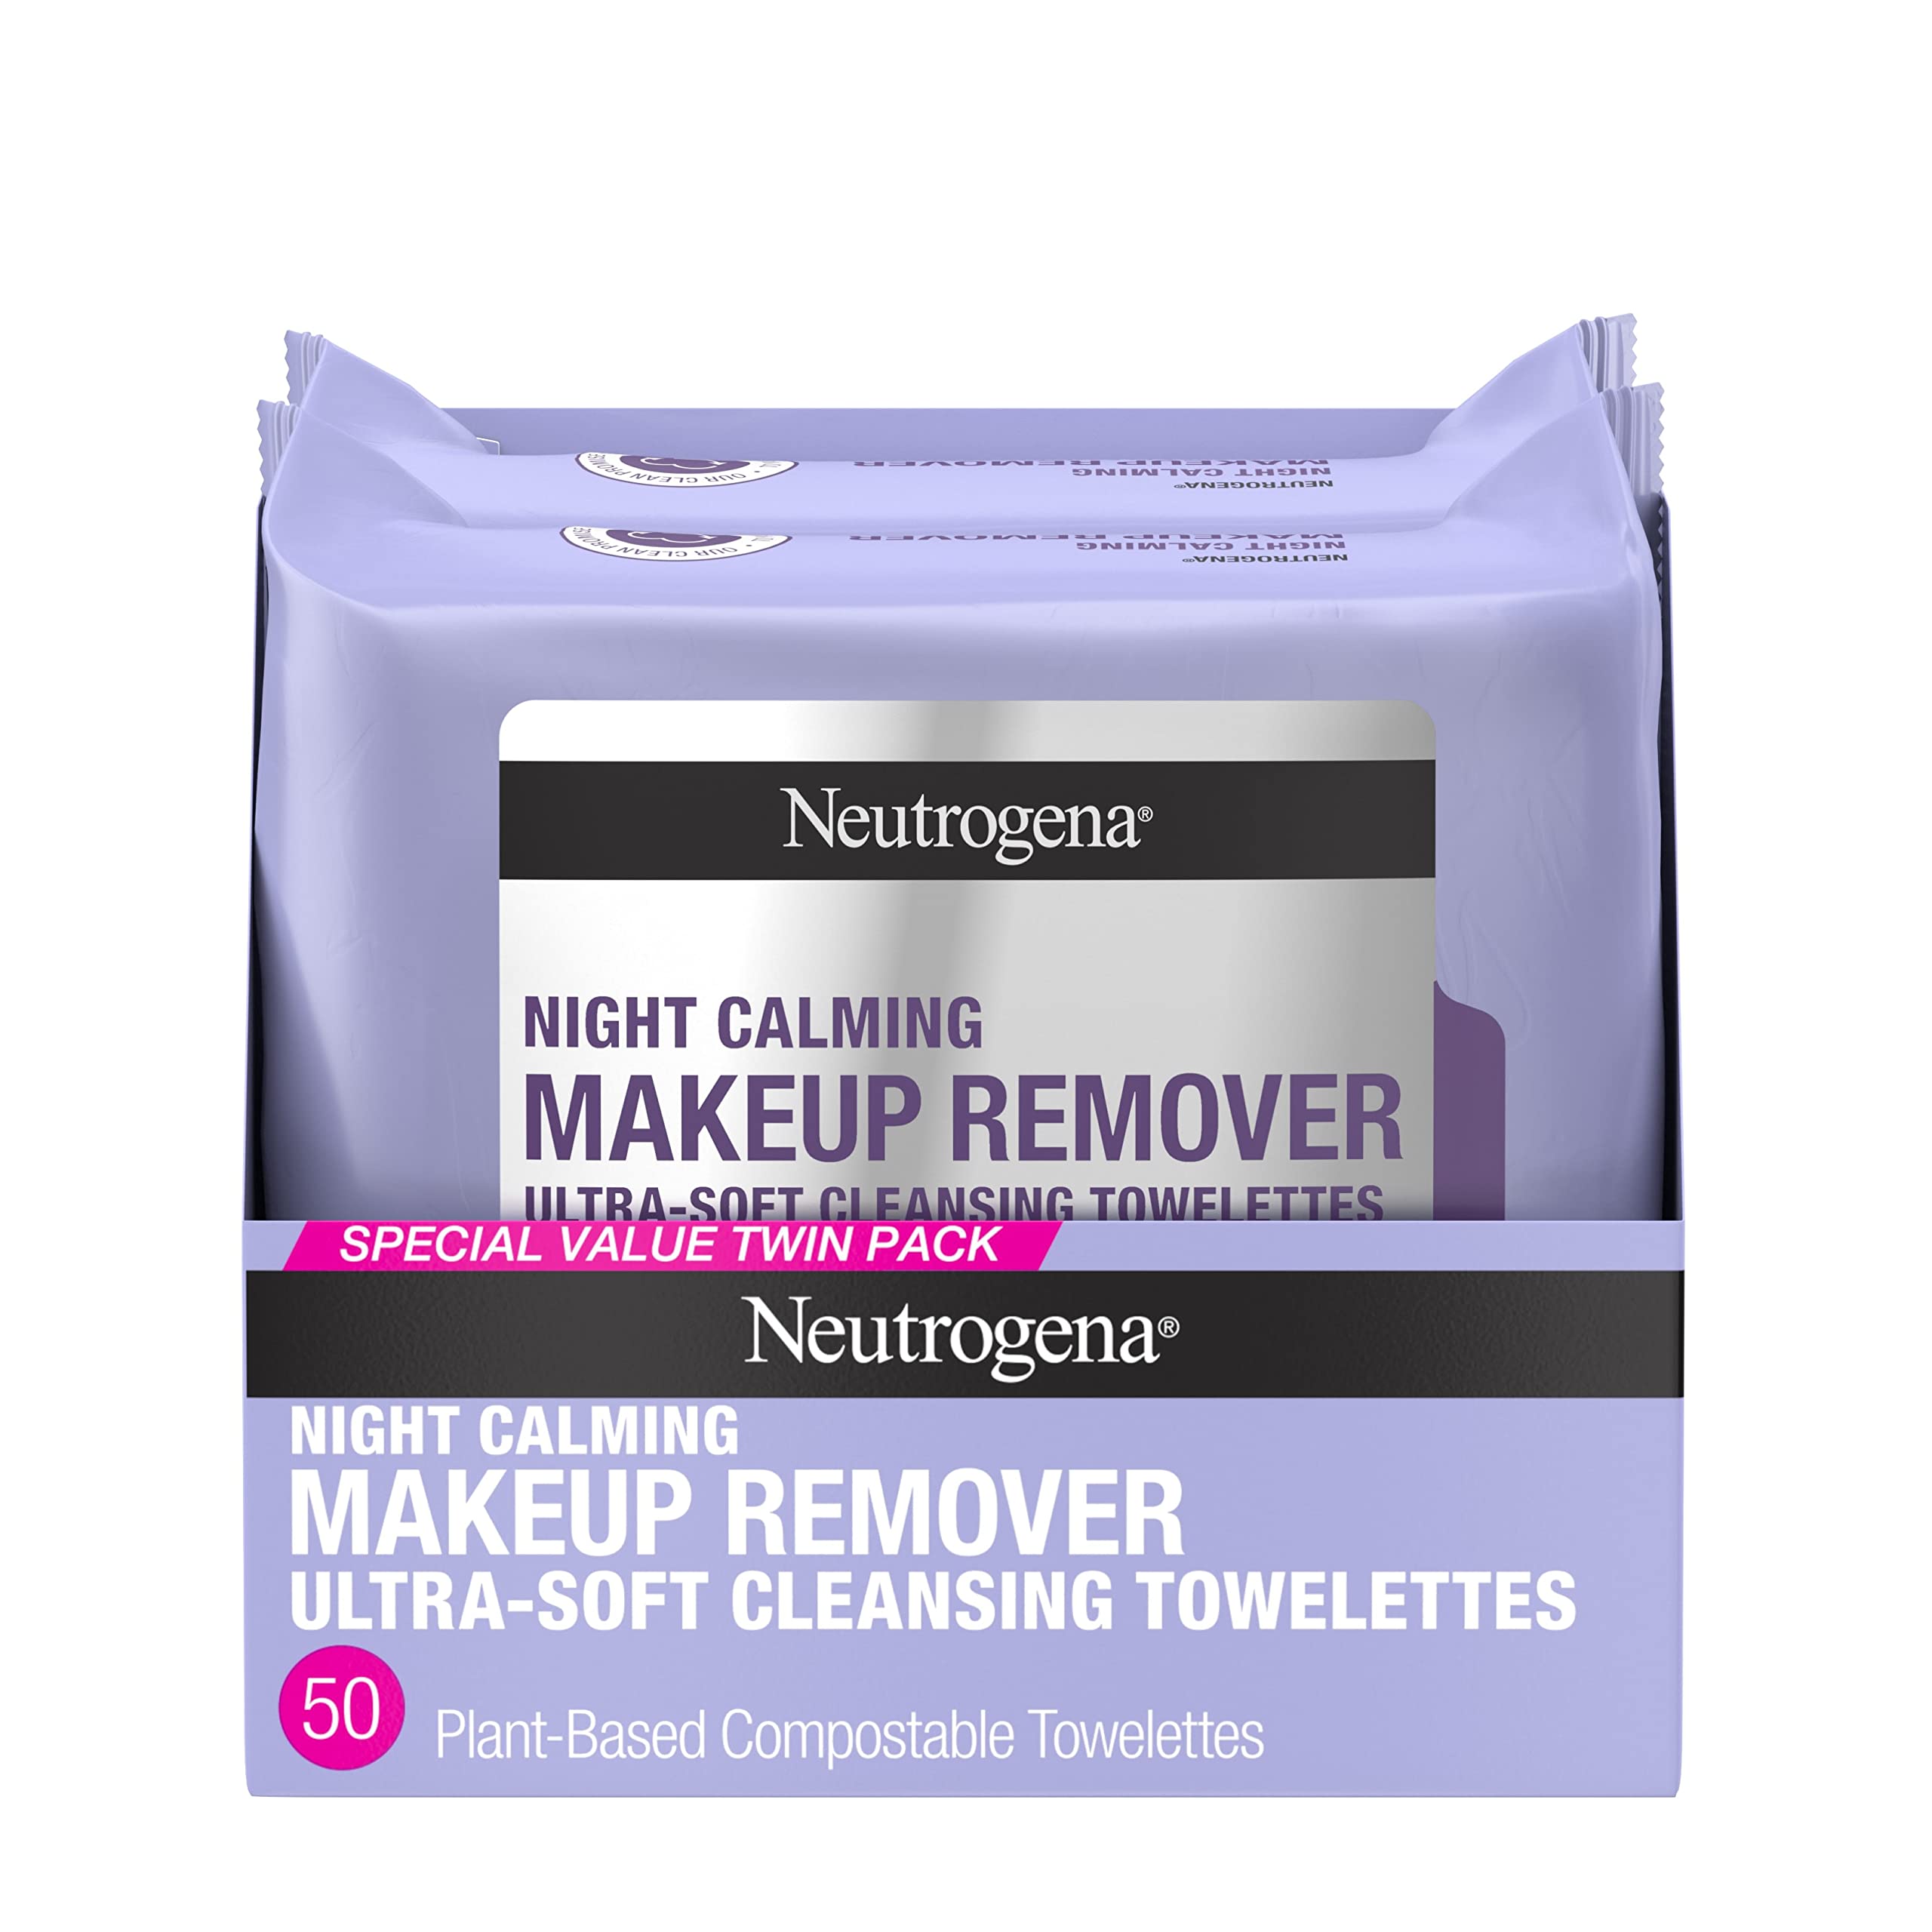 Neutrogena Night Calming Makeup Remover Face Wipes